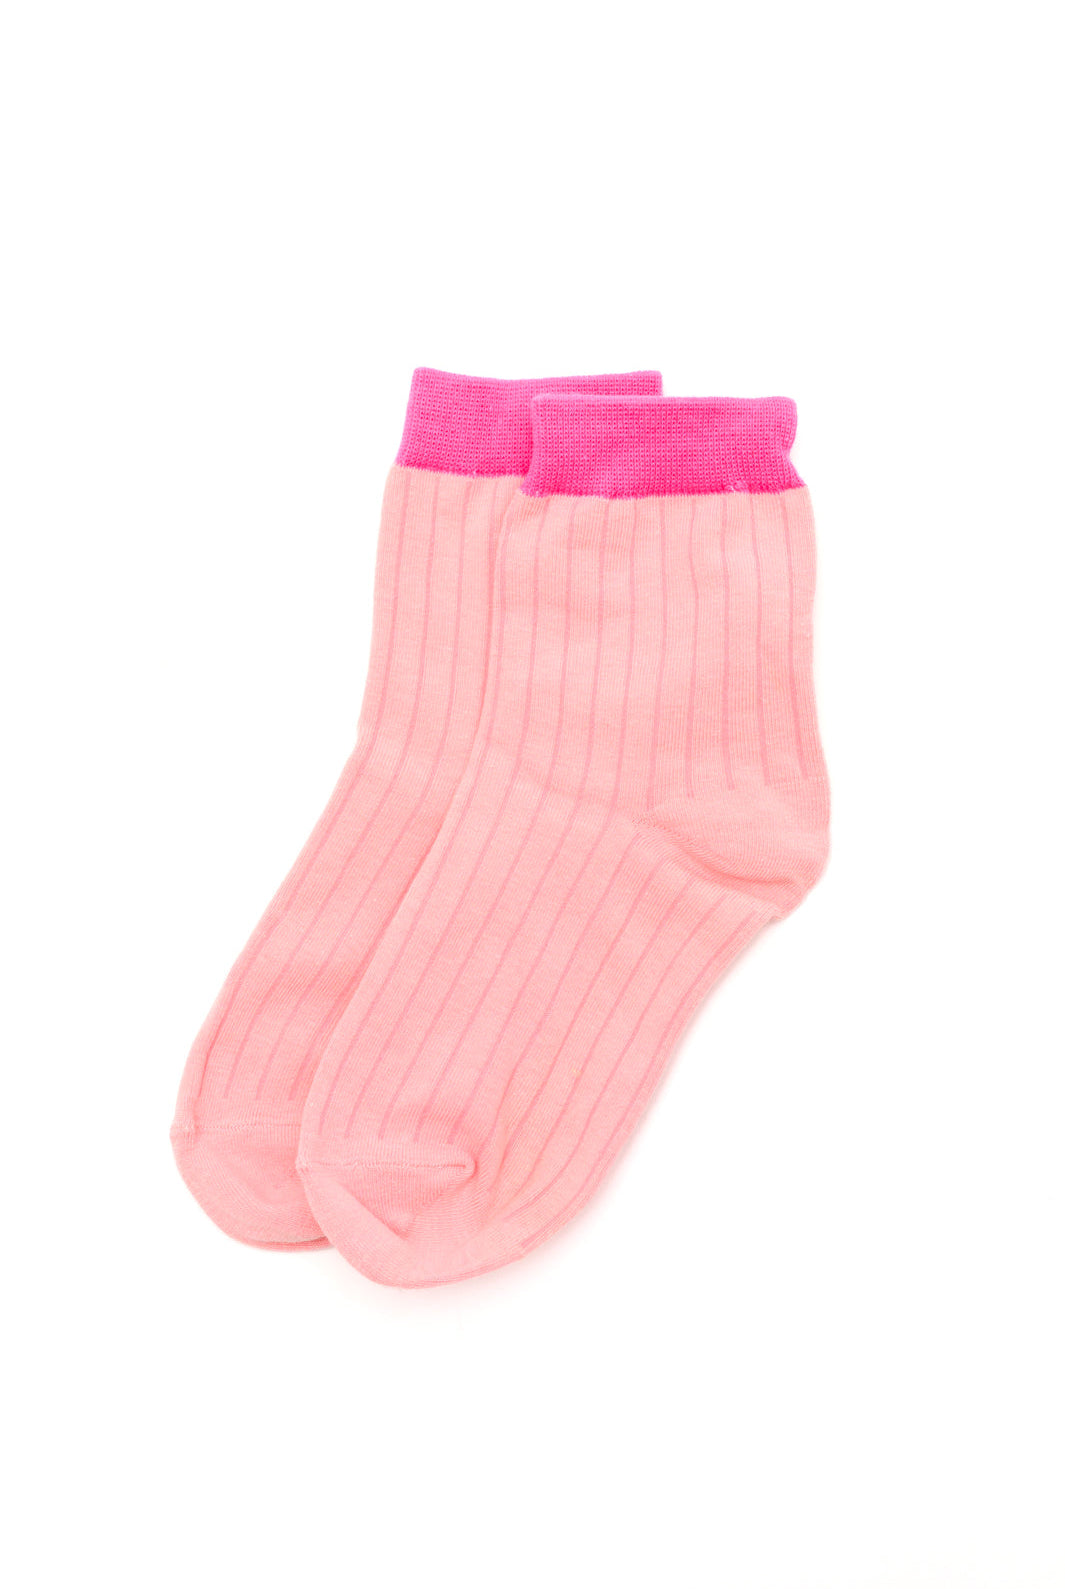 Sweet Socks Set of 4 Color Block Socks-Socks-Krush Kandy, Women's Online Fashion Boutique Located in Phoenix, Arizona (Scottsdale Area)